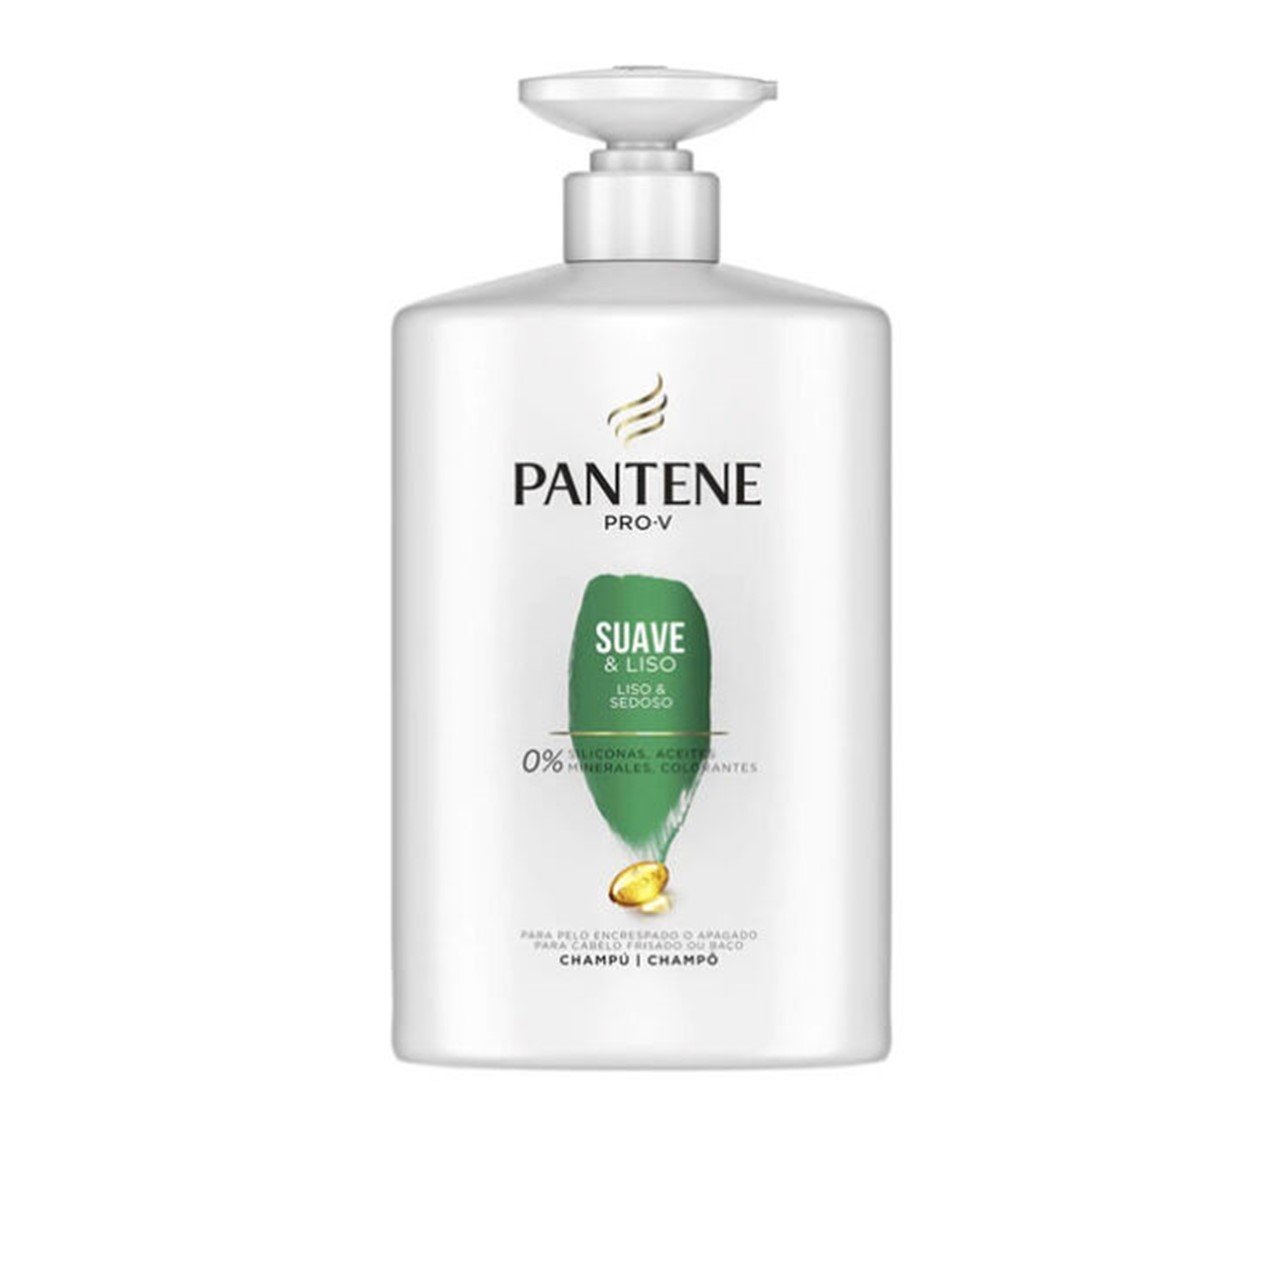 Pantene Pro-V Smooth & Sleek Shampoo 1L (33.81fl oz)